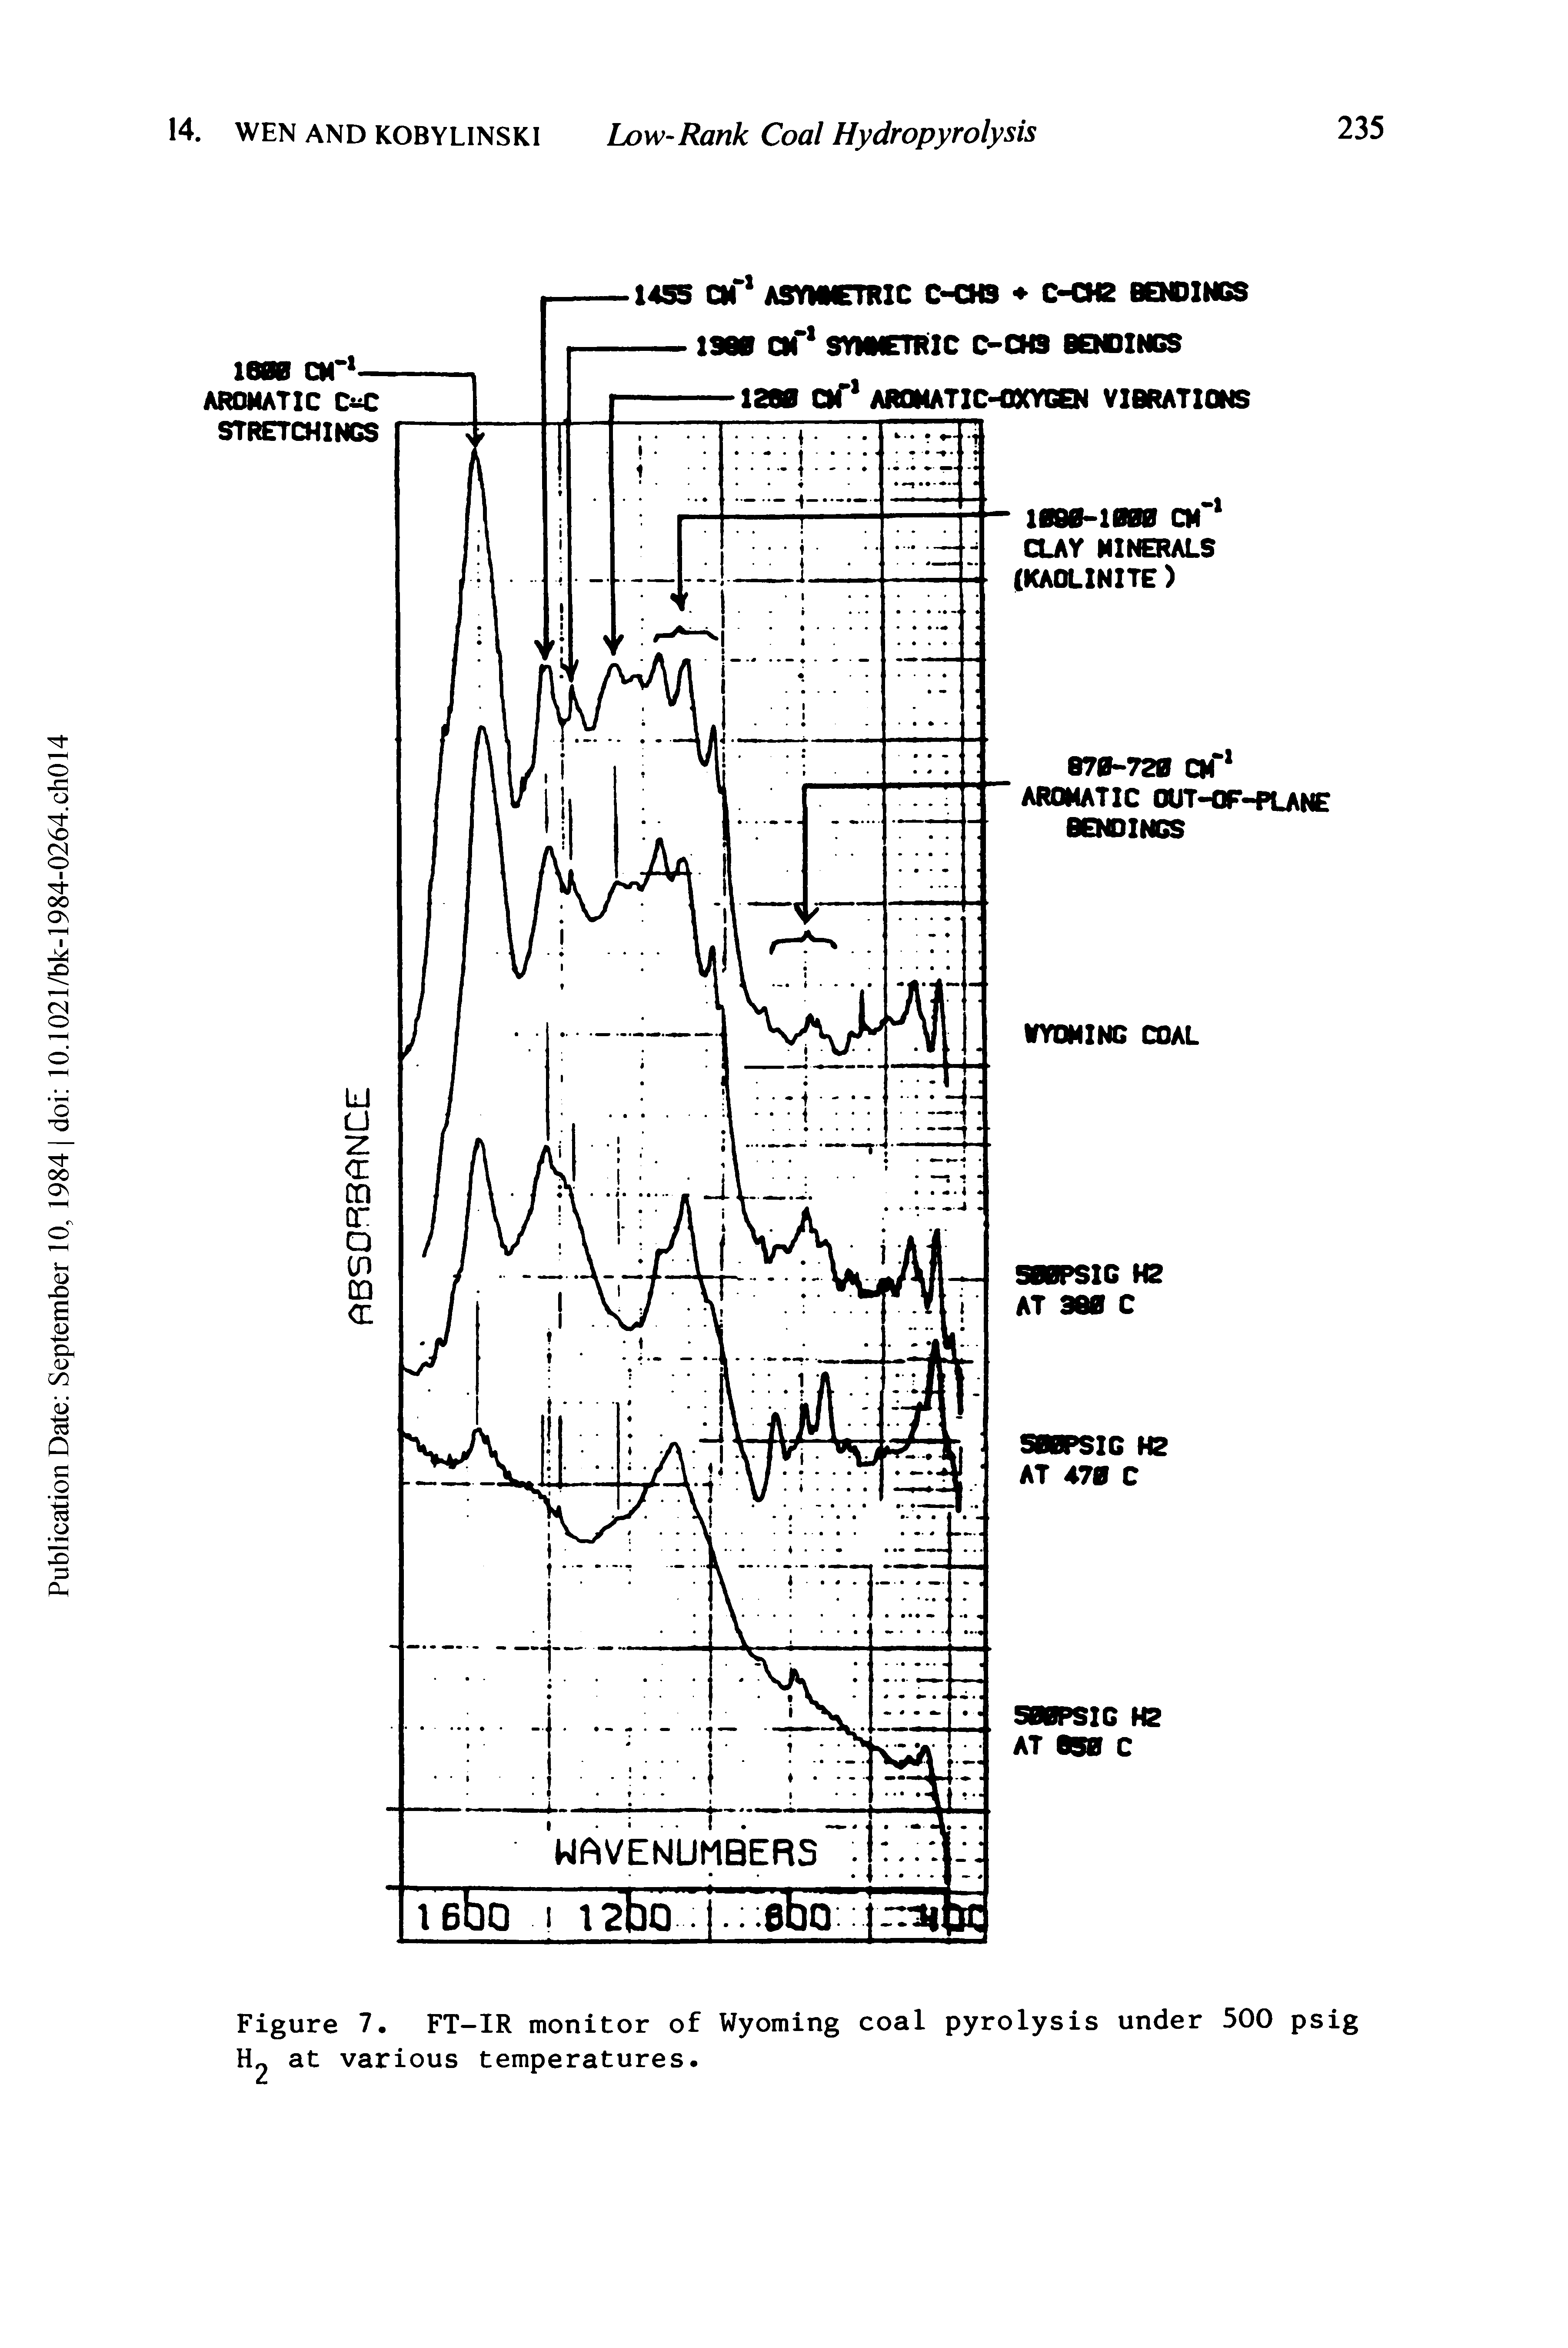 Figure 7. FT-IR monitor of Wyoming coal pyrolysis under 500 psig H2 at various temperatures.